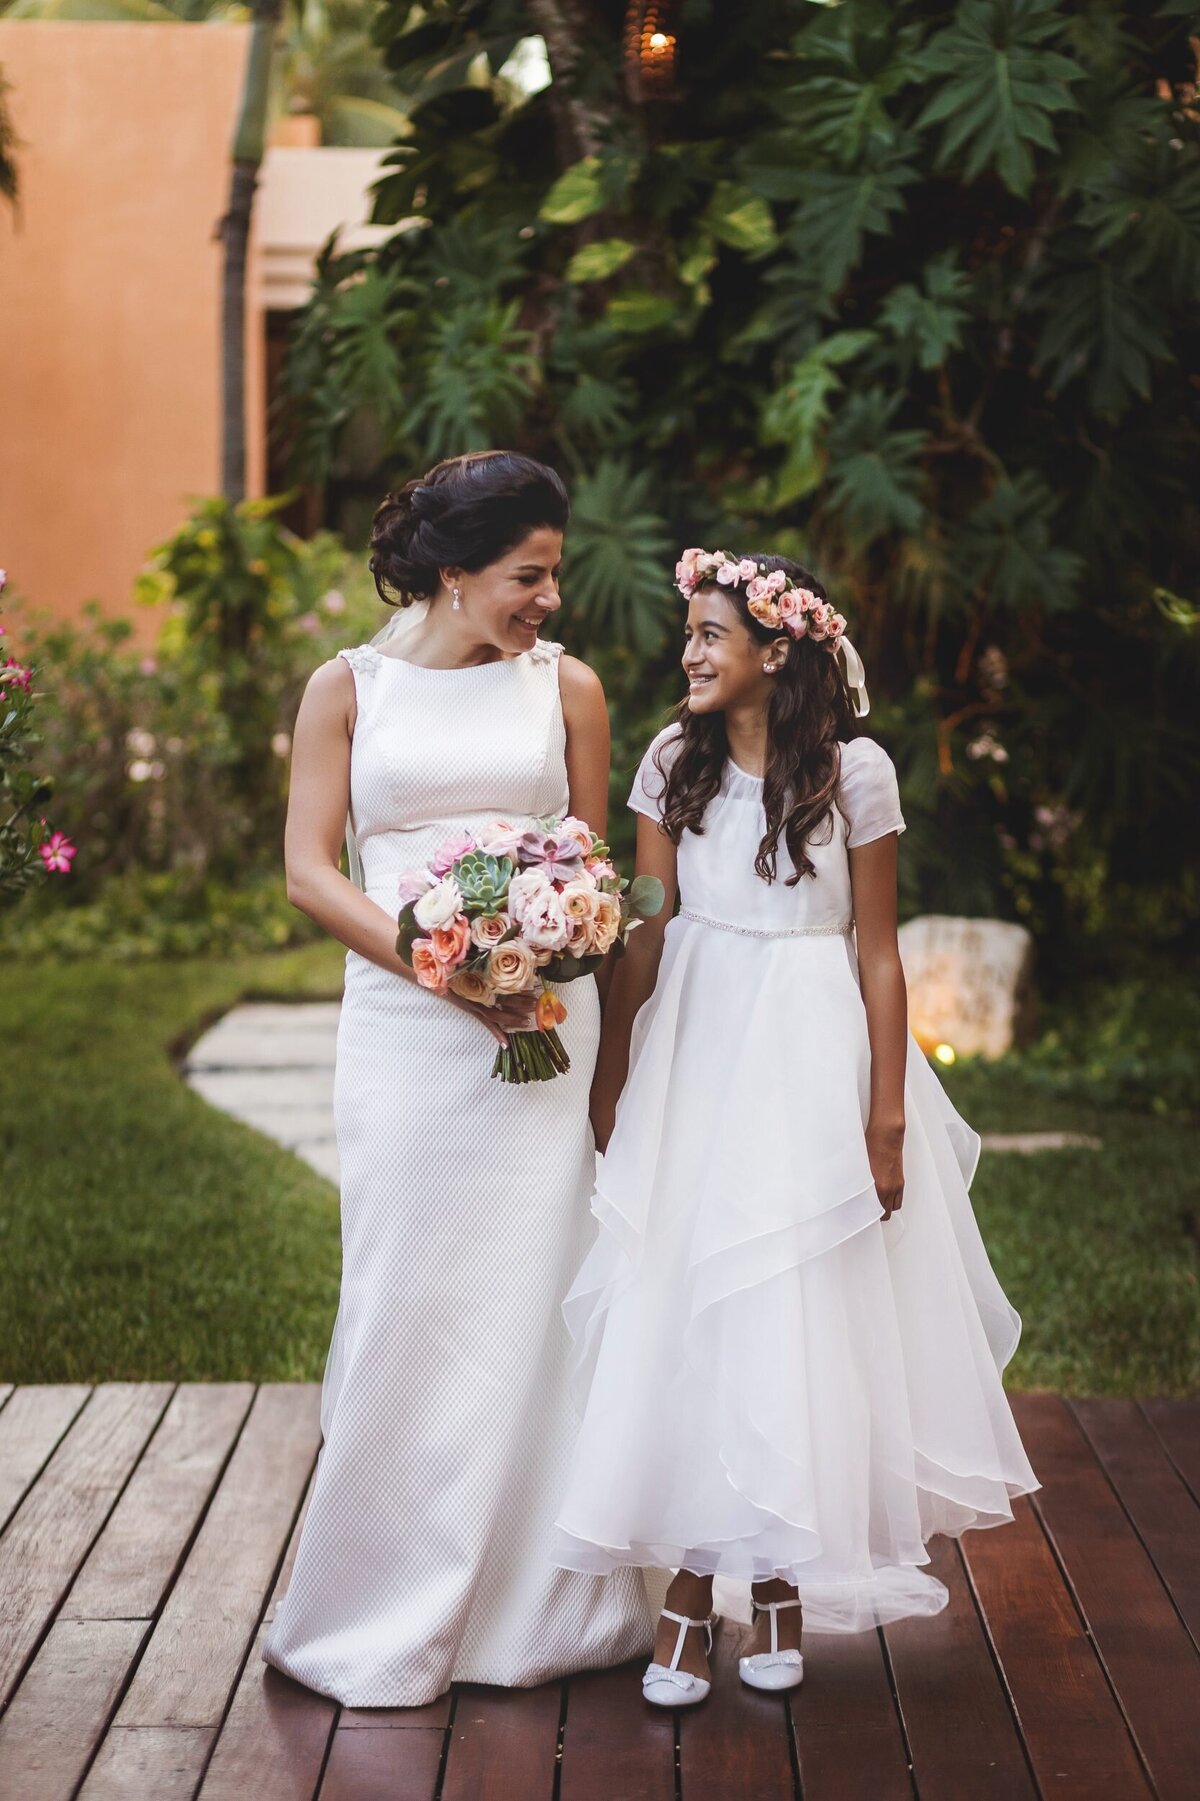 Bride with flower girl at wedding in Riviera Maya